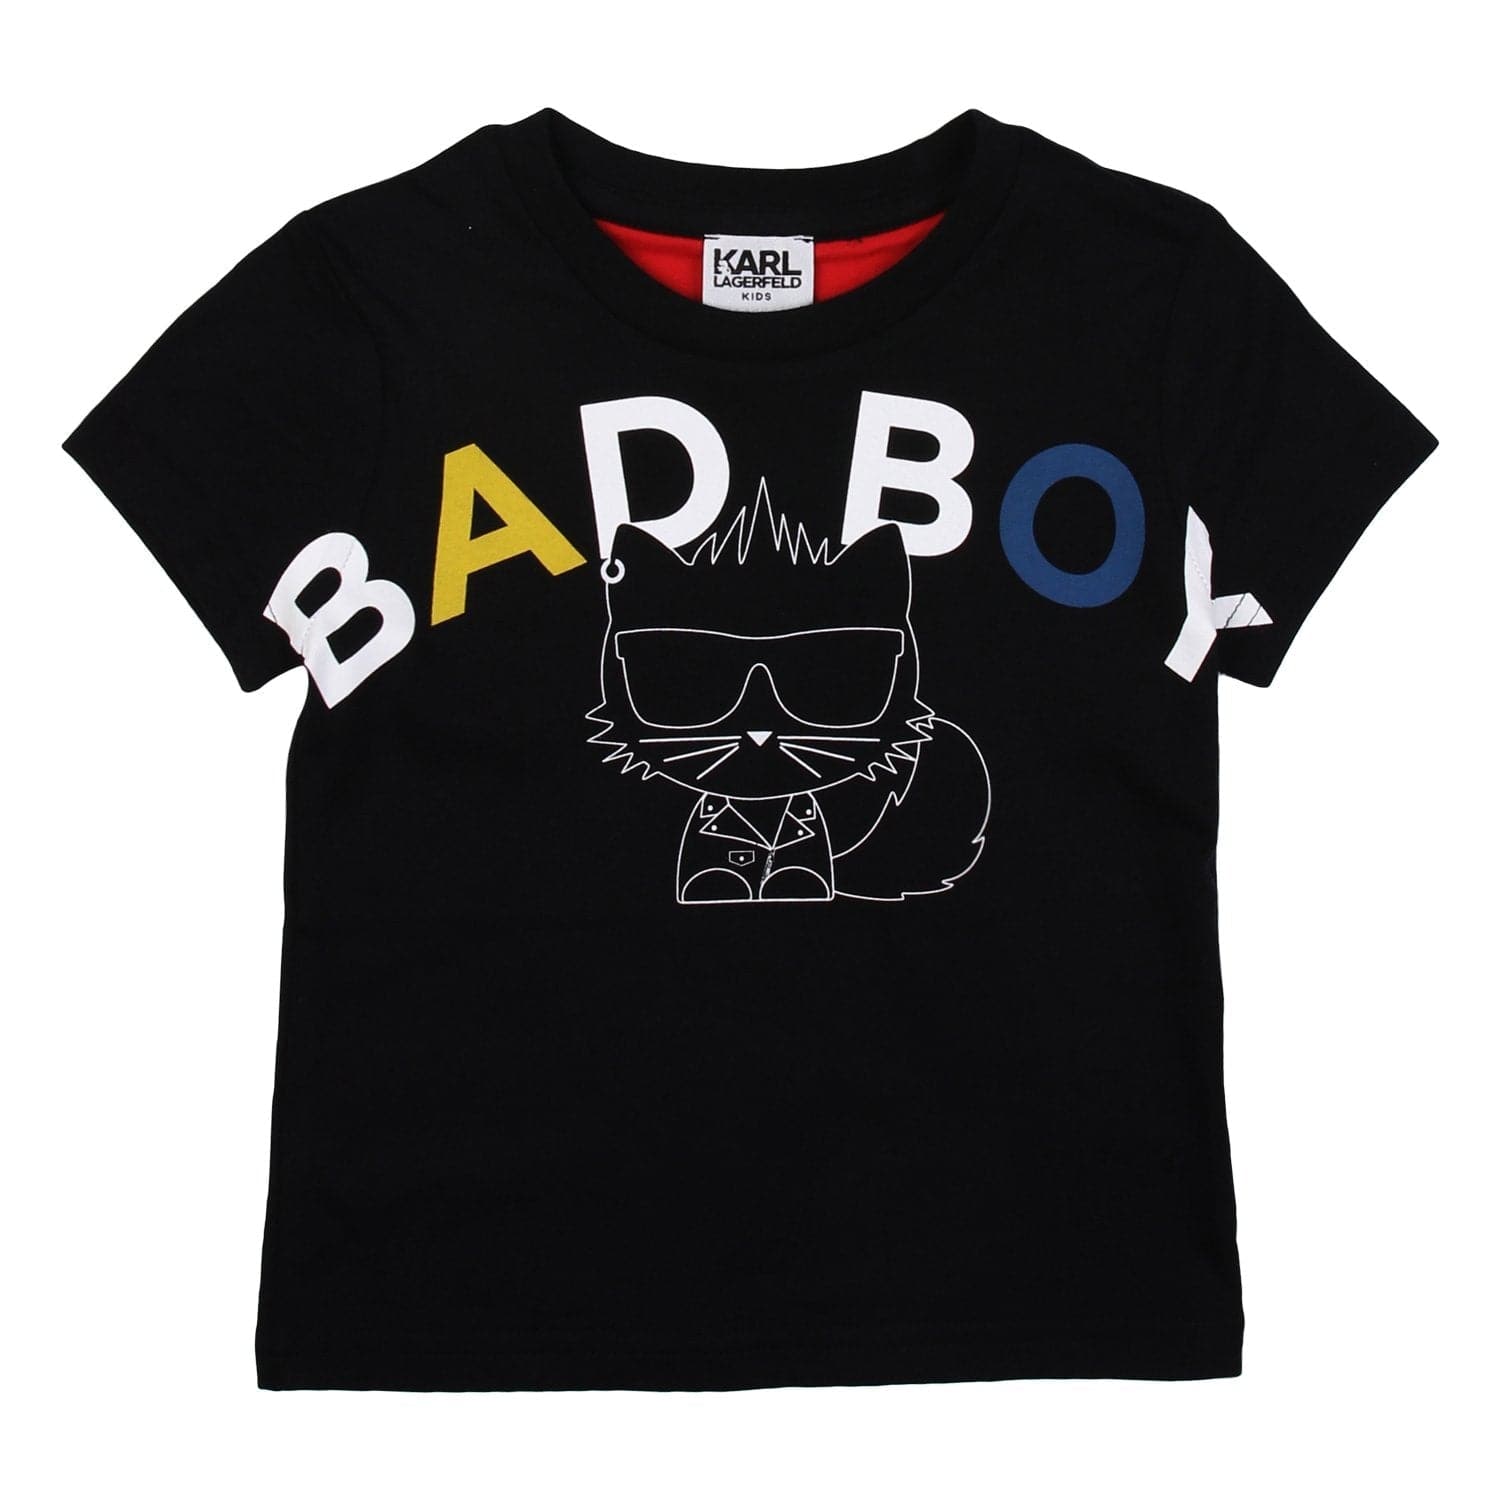 Karl Lagerfeld Kool Kat T-Shirt - Tulle Twirls